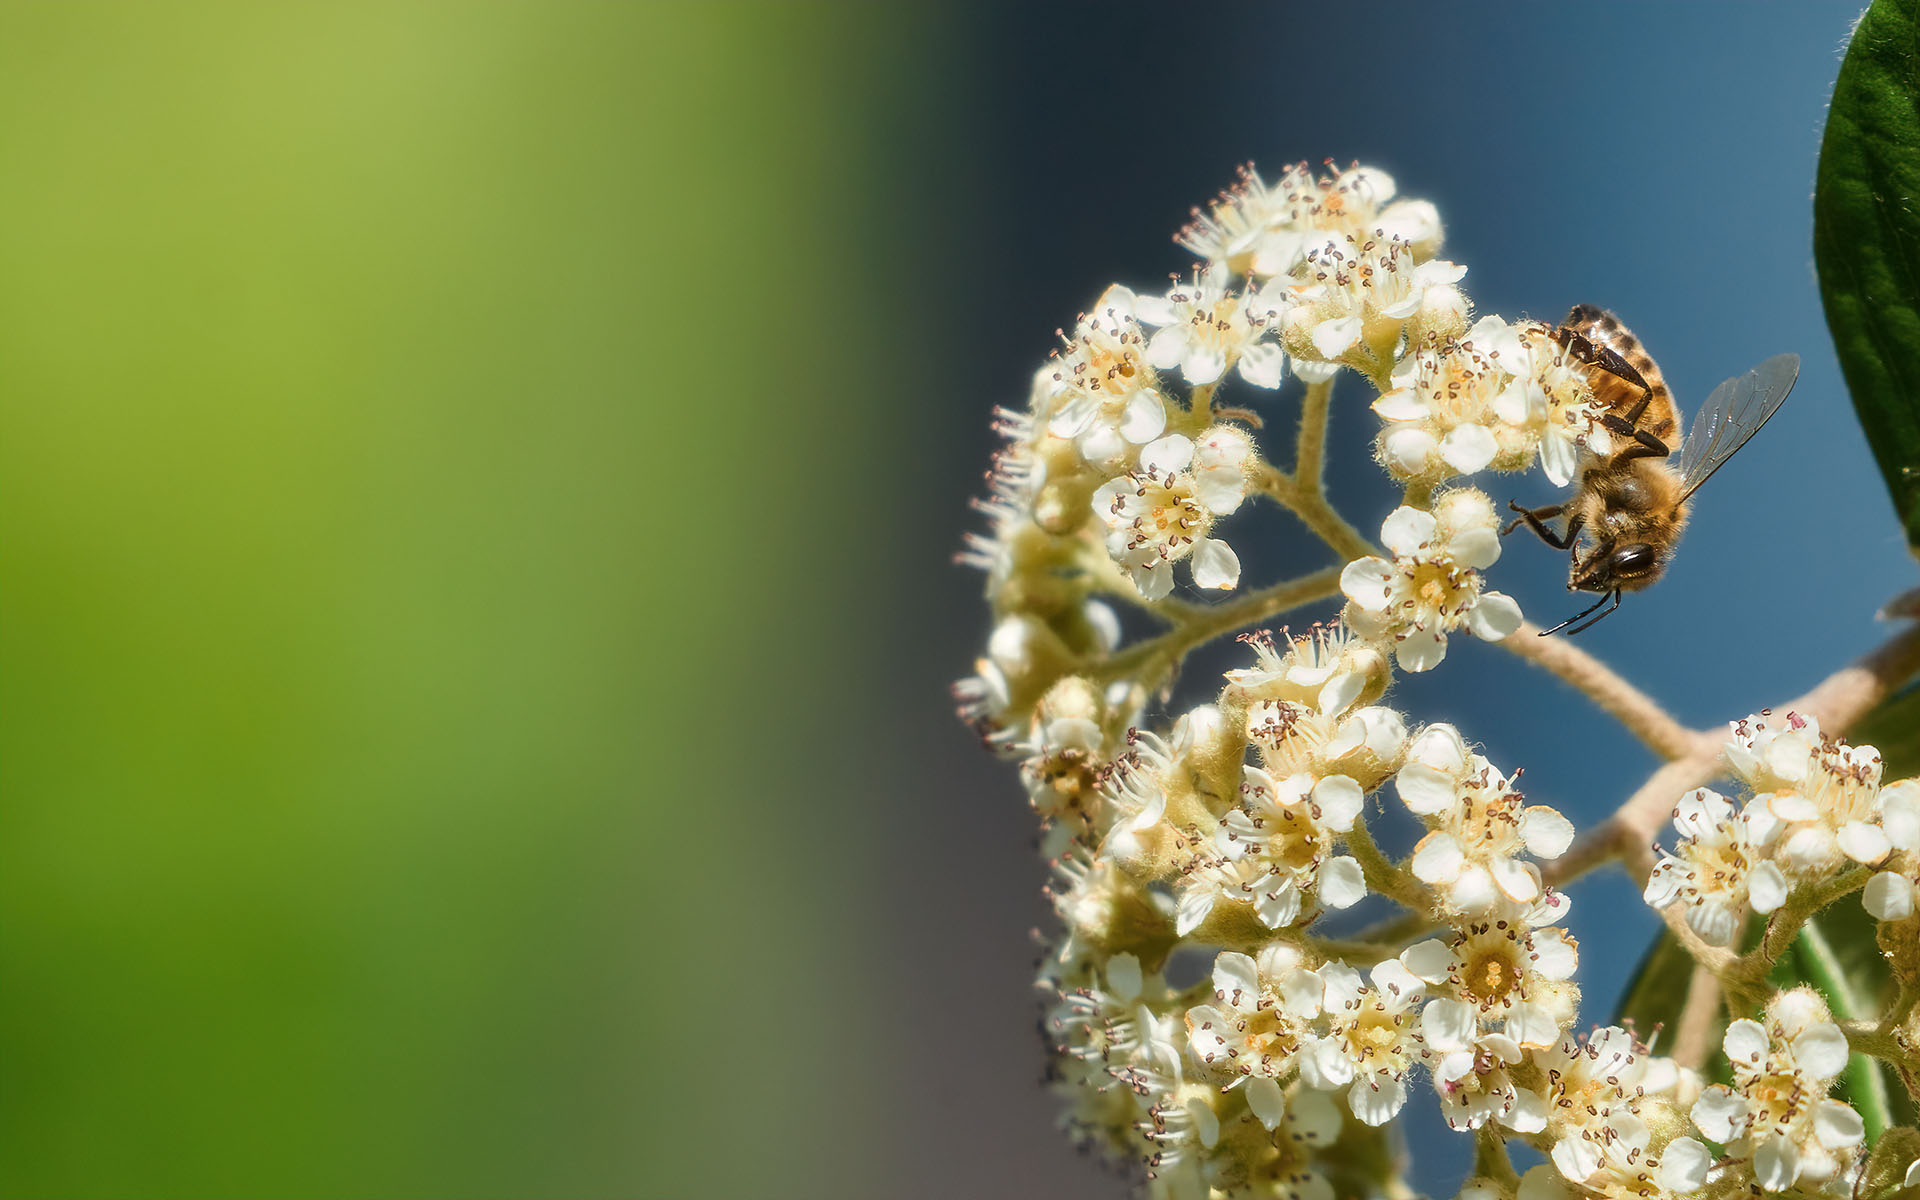 Cotton flower with bee - Tortonese Hills 29.05.20...